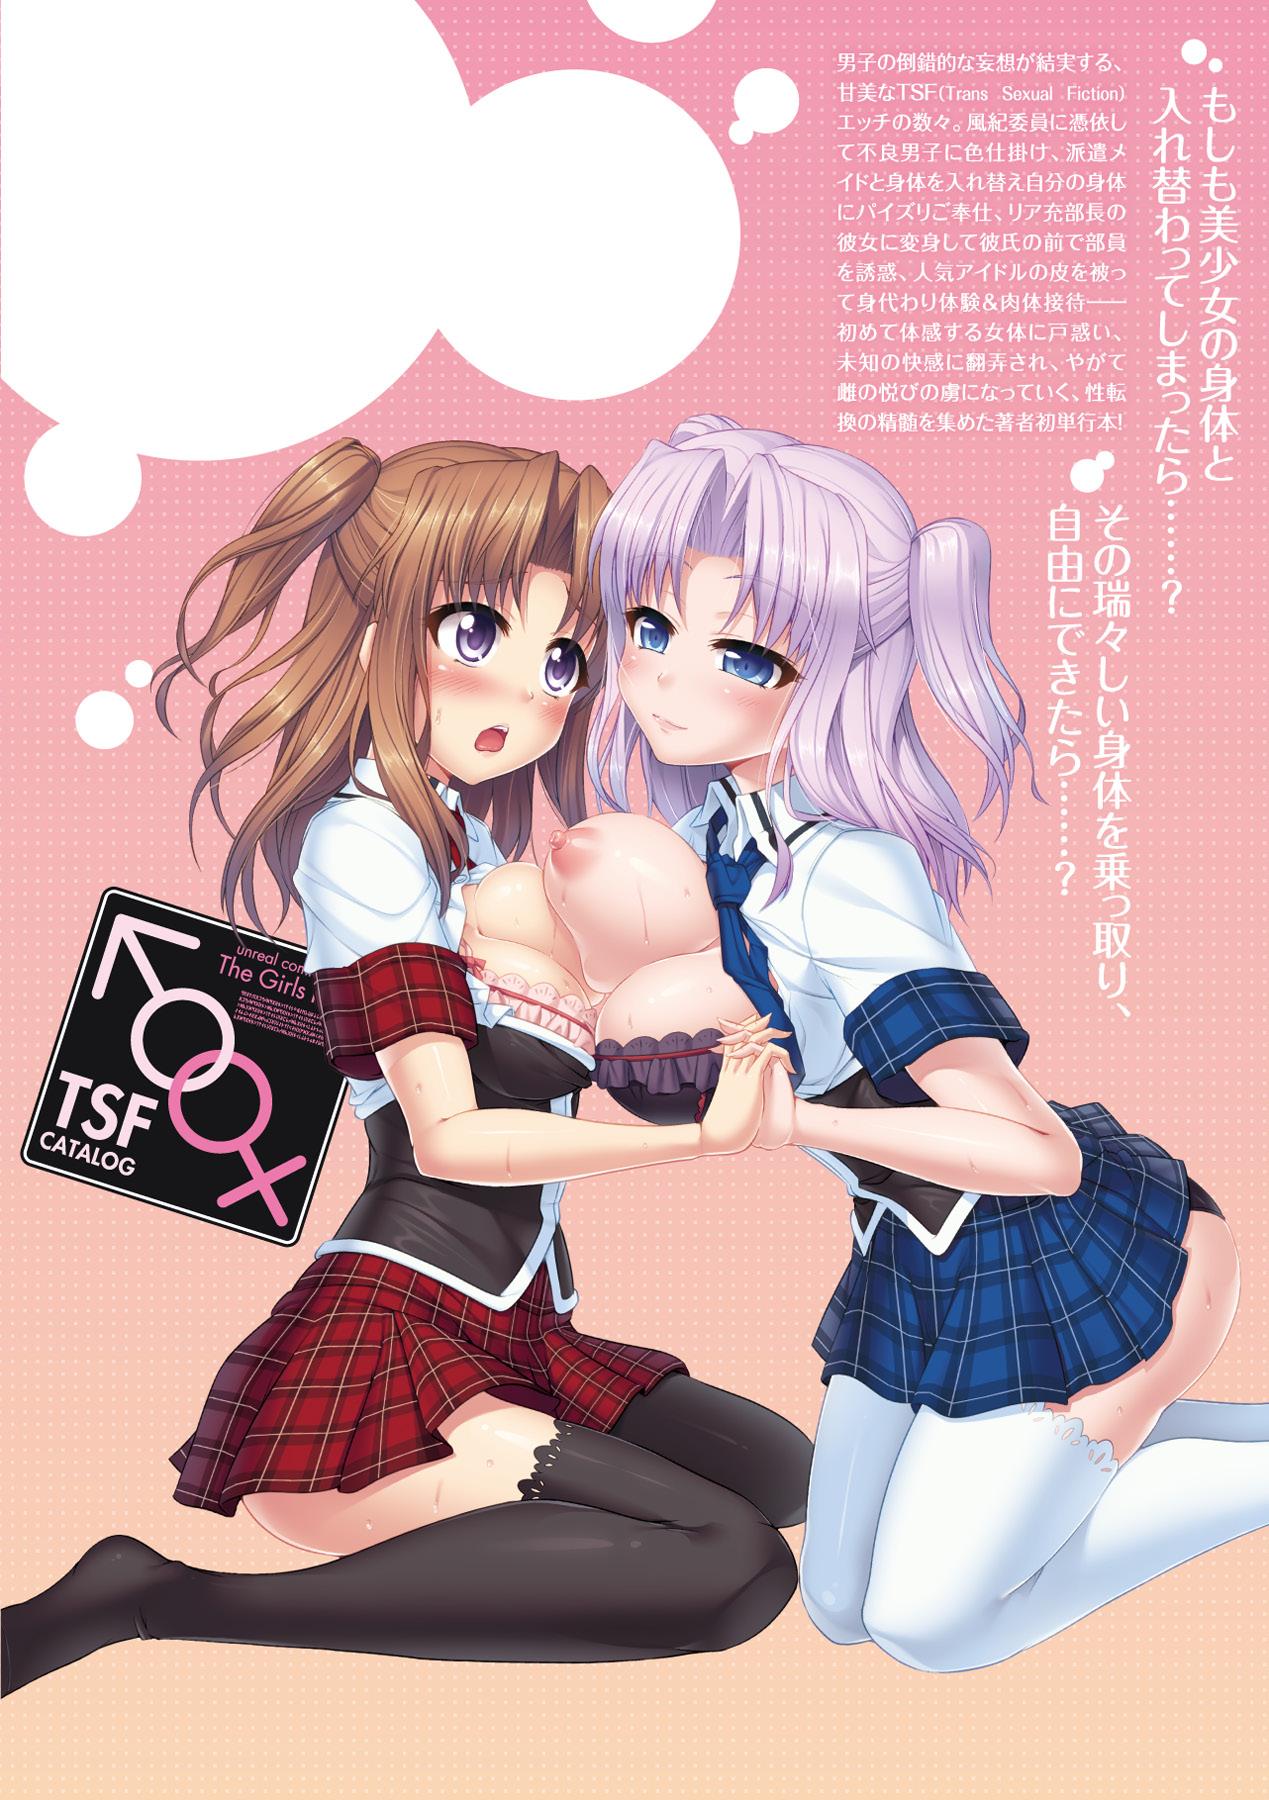 [Taniguchi-san] Onnanoko Yuugi ~Trans Sexual Fiction the Girls Play~ TSF Catalog [Digital] 184